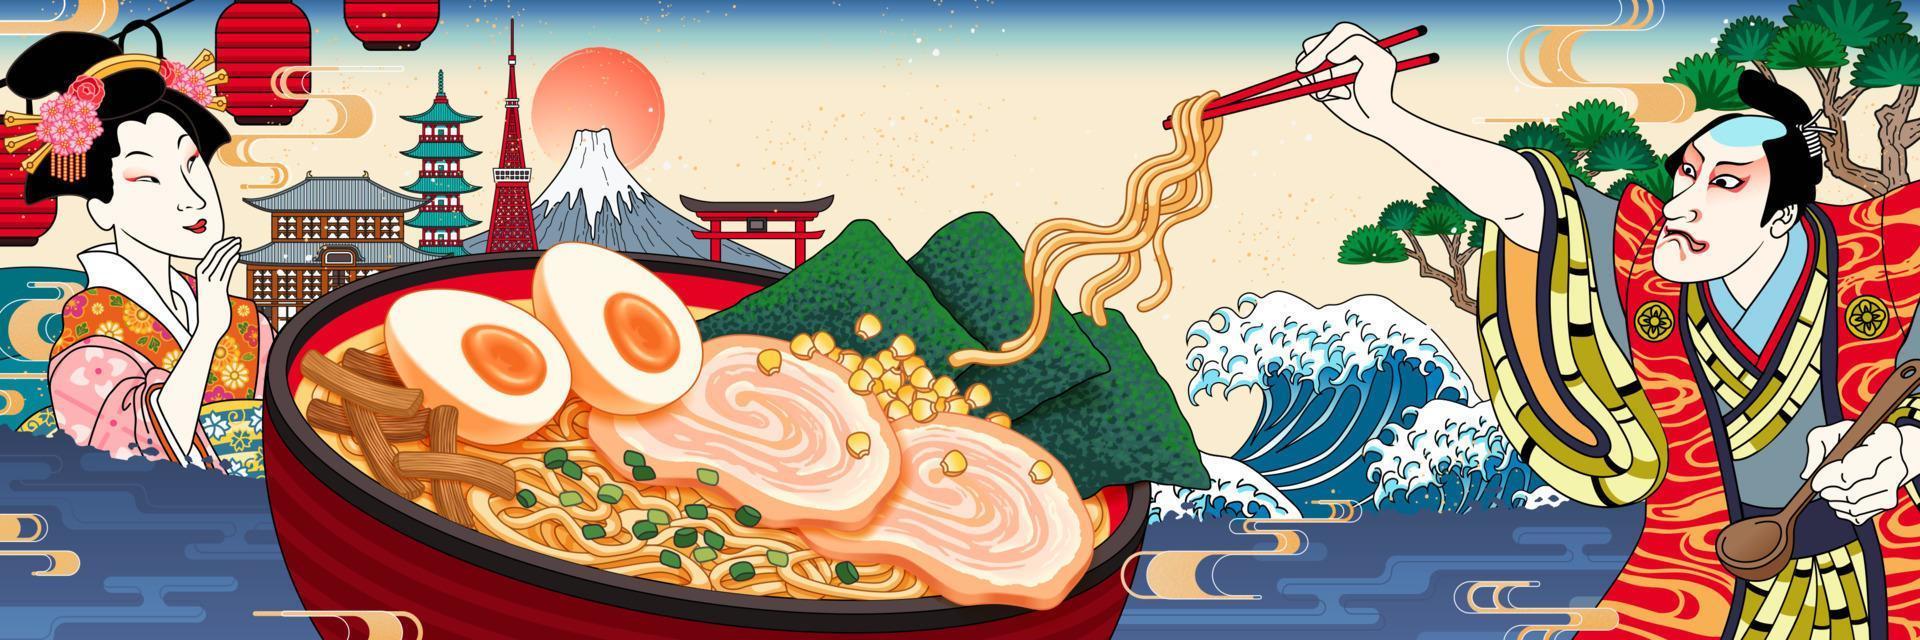 utsökt tonkotsu Ramen buljong baner illustration i ukiyo-e stil vektor